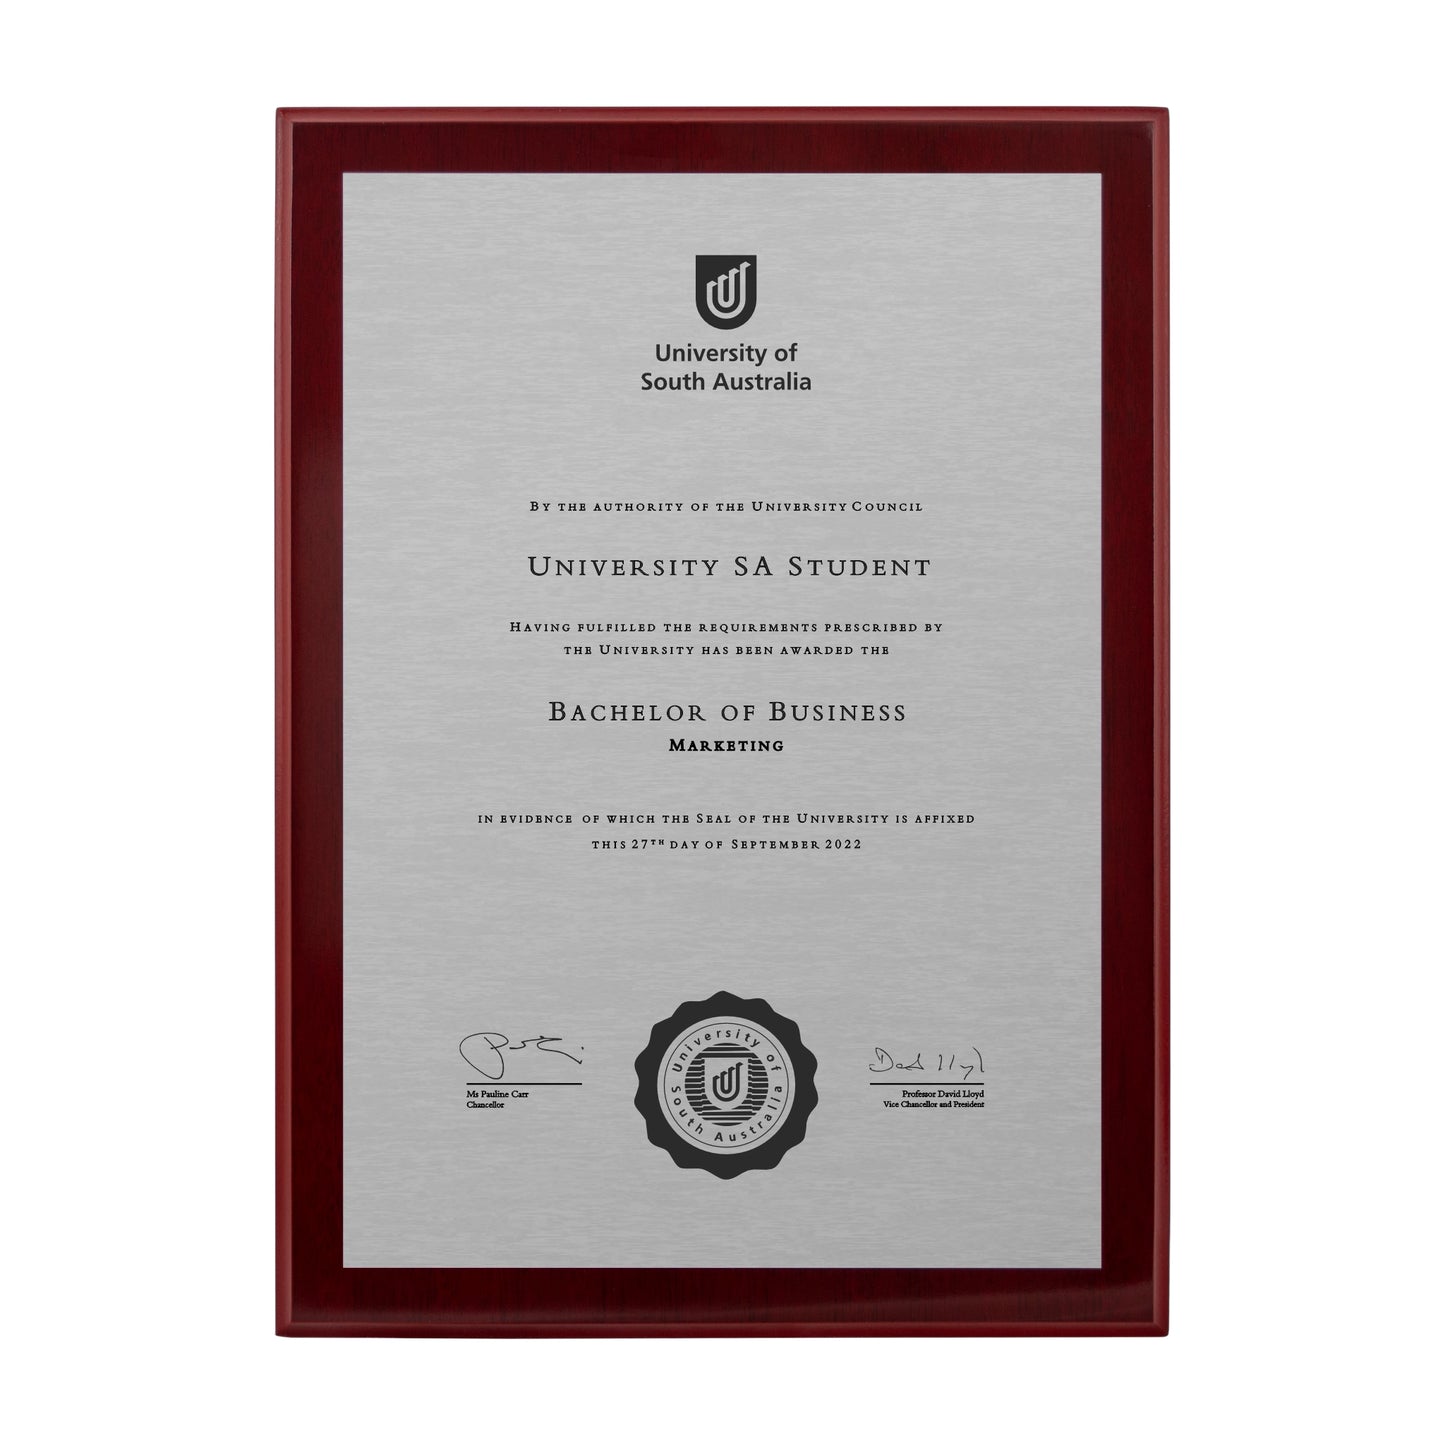 University of South Australia Certificate Plaque - A4 Size